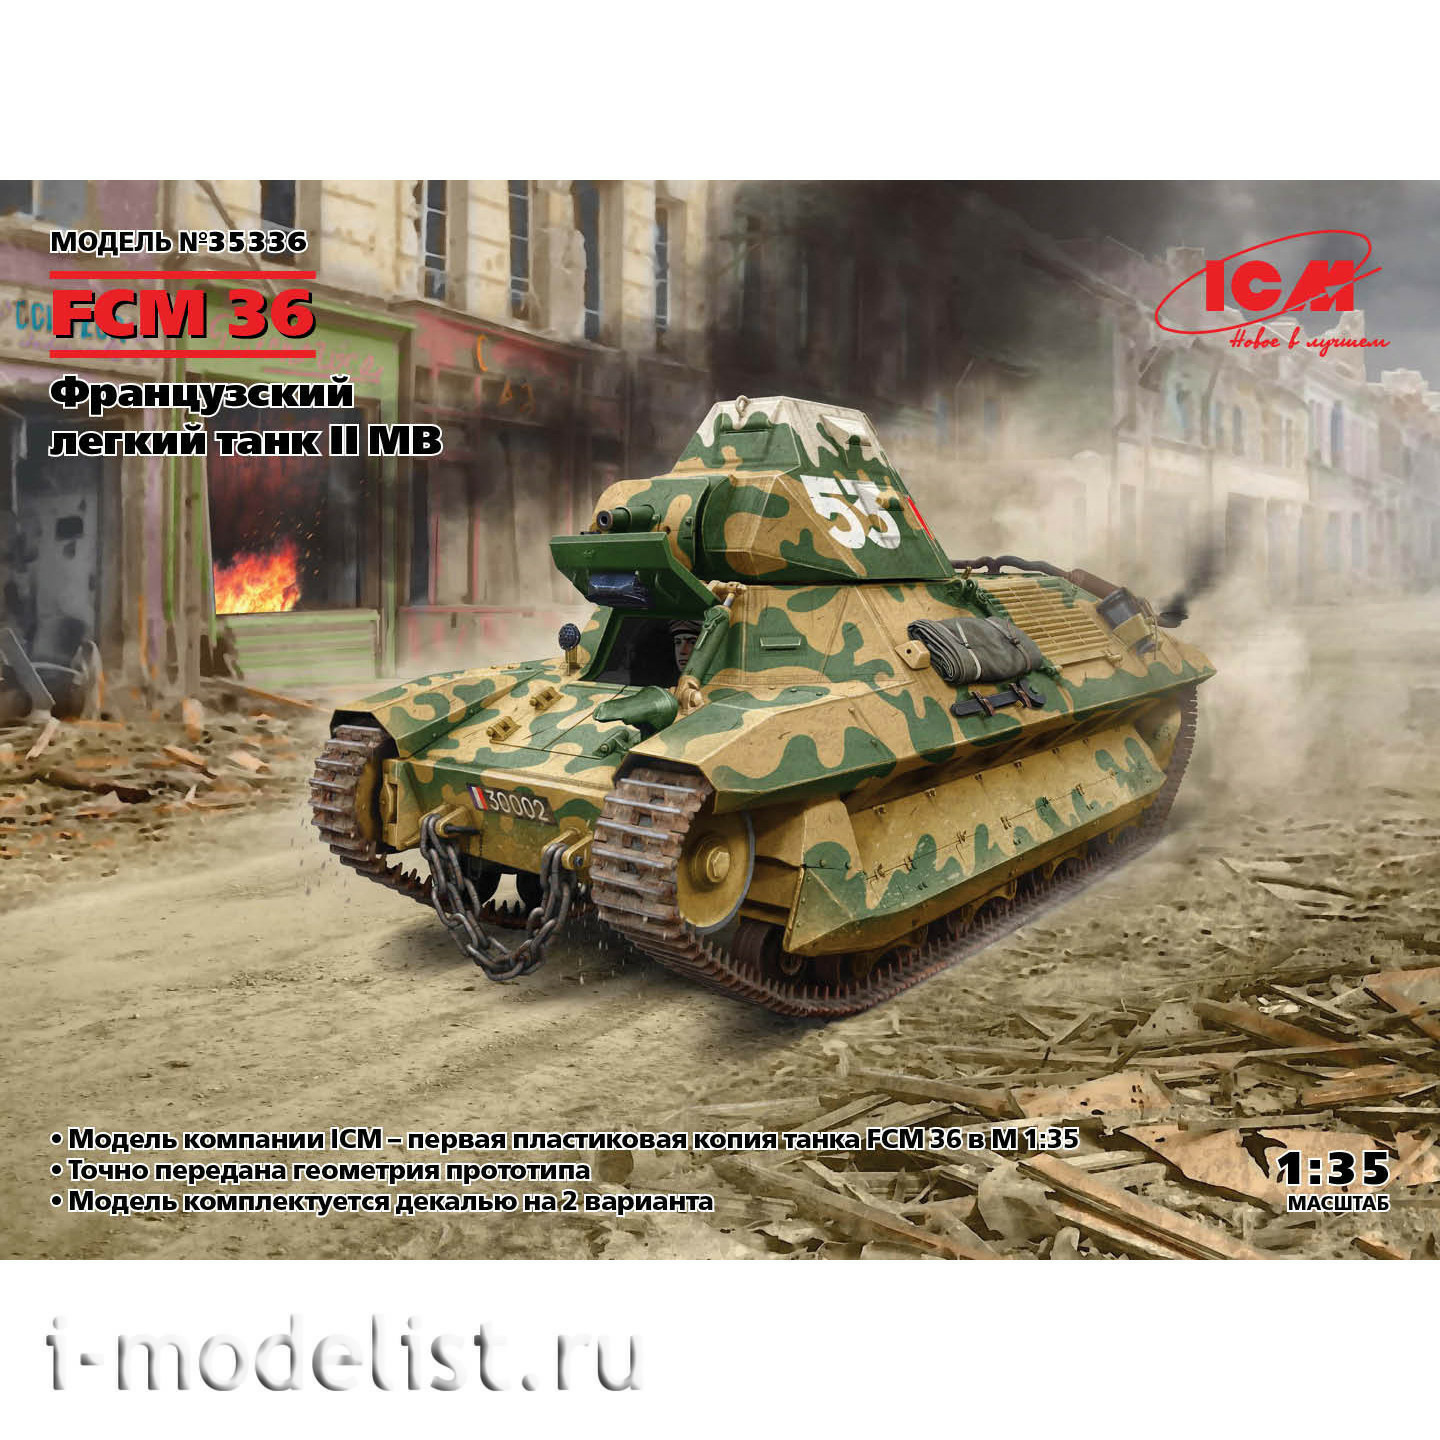 35336 ICM 1/35 FCM 36, Французский легкий танк II МВ